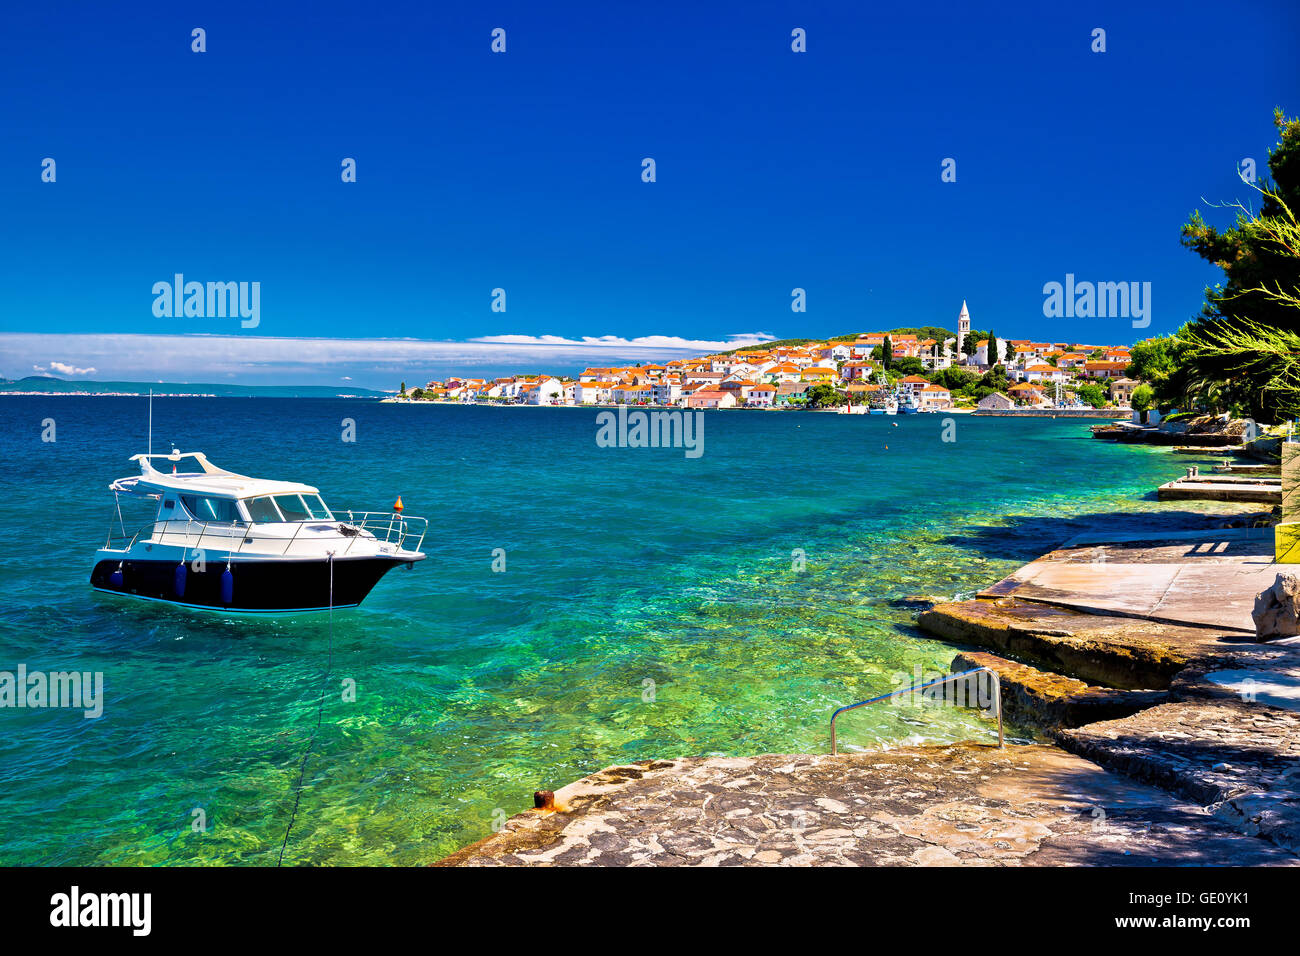 Kali-Strand und Boot am türkisblauen Meer, Insel Ugljan, Kroatien Stockfoto